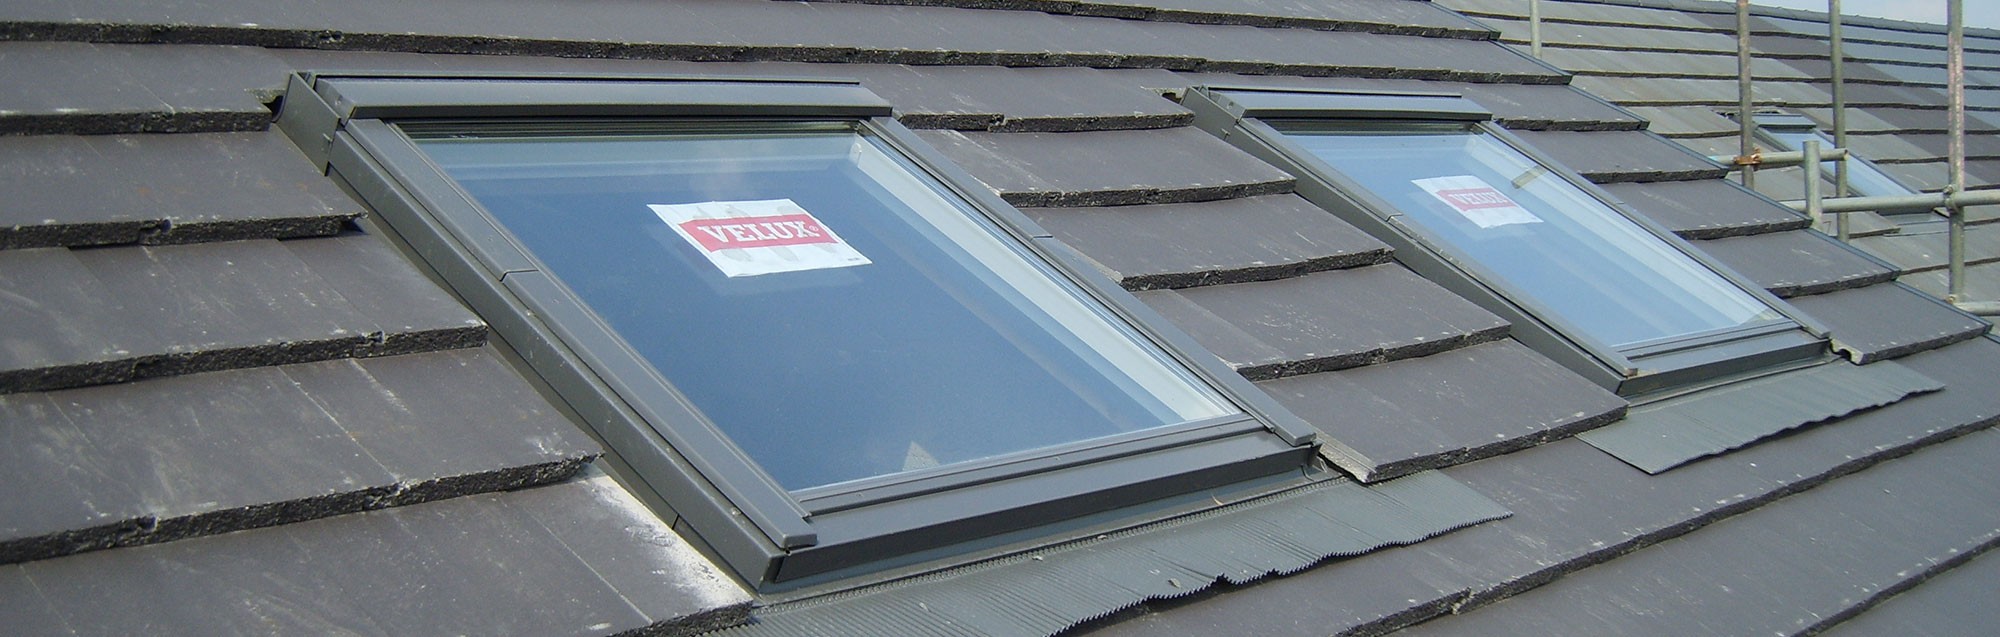 Velux windows in slate roof